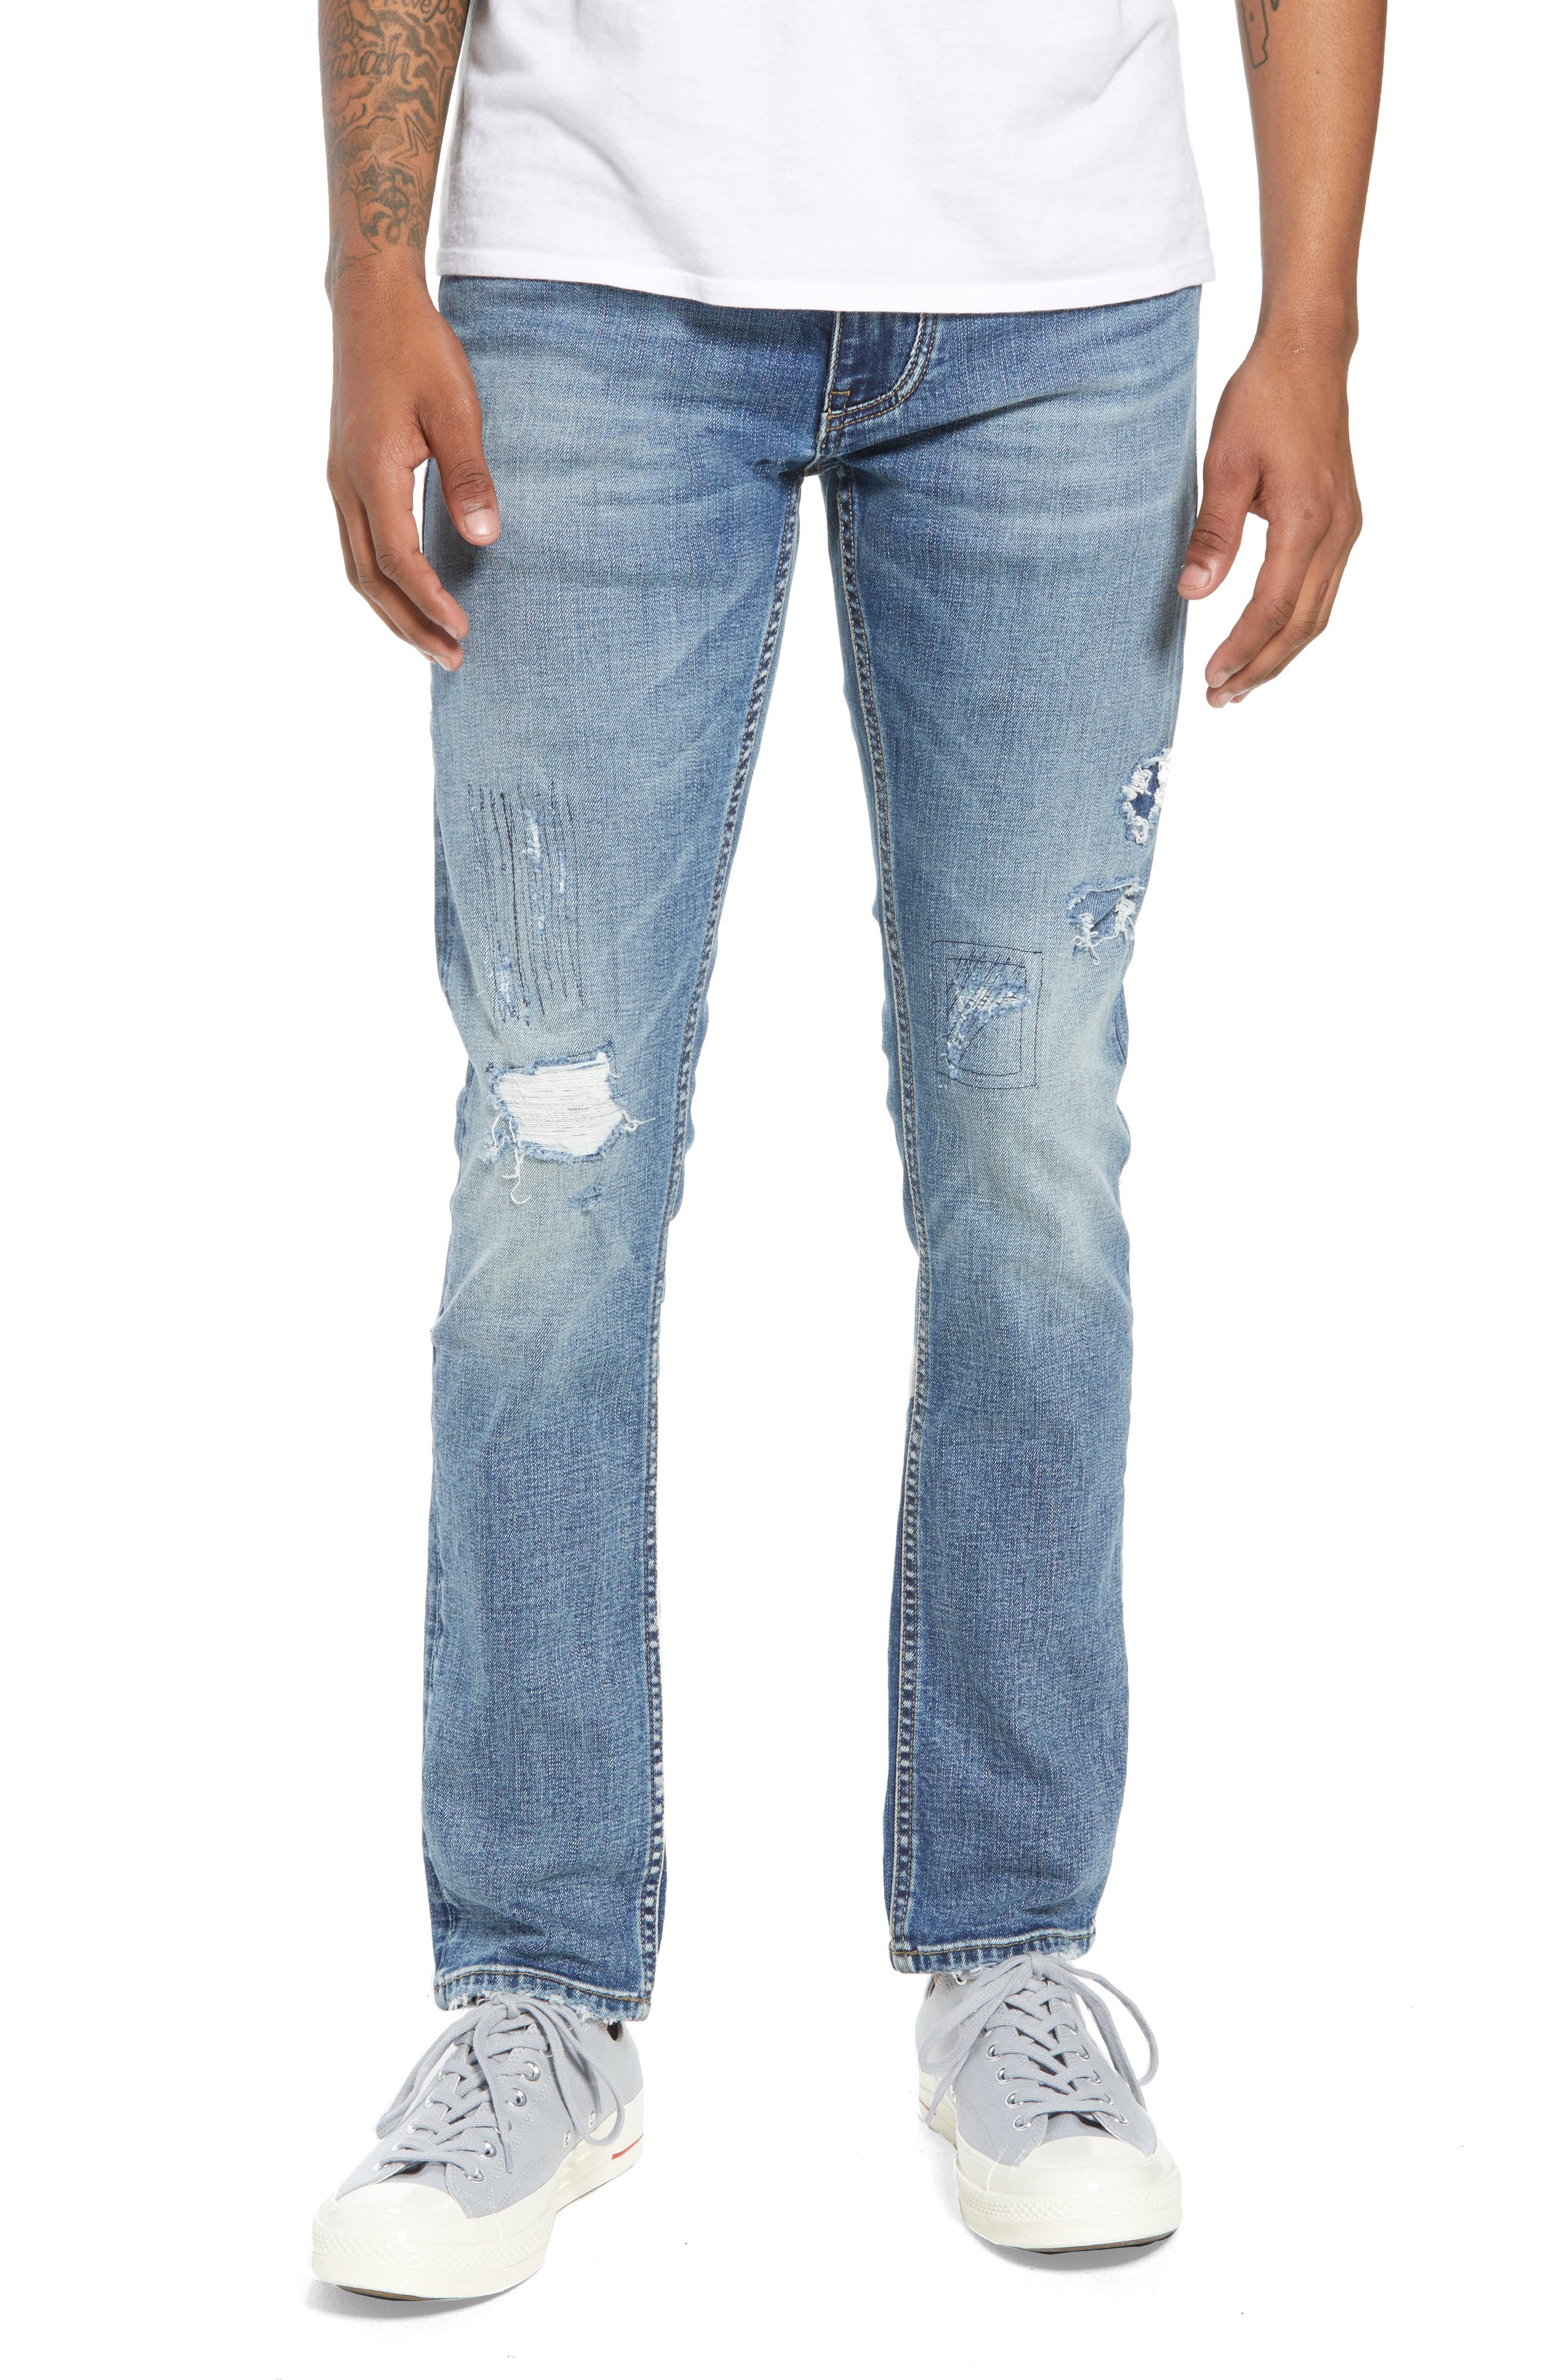 blanknyc wooster jeans